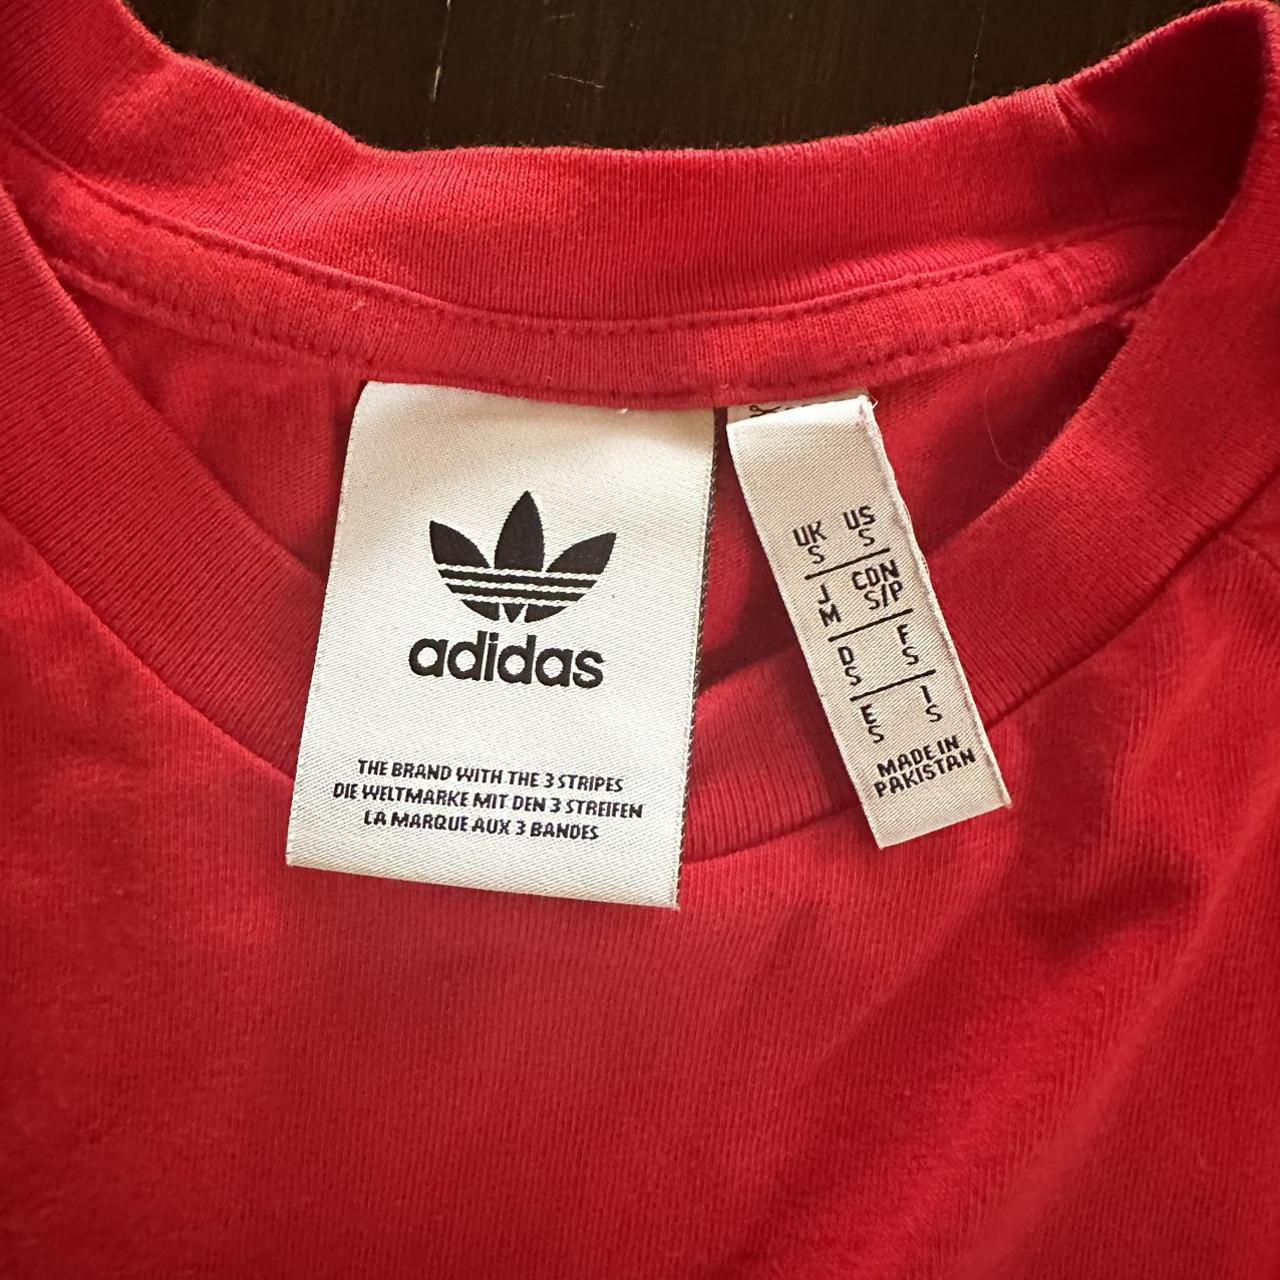 Adidas Originals Men's Red Shirt (3)